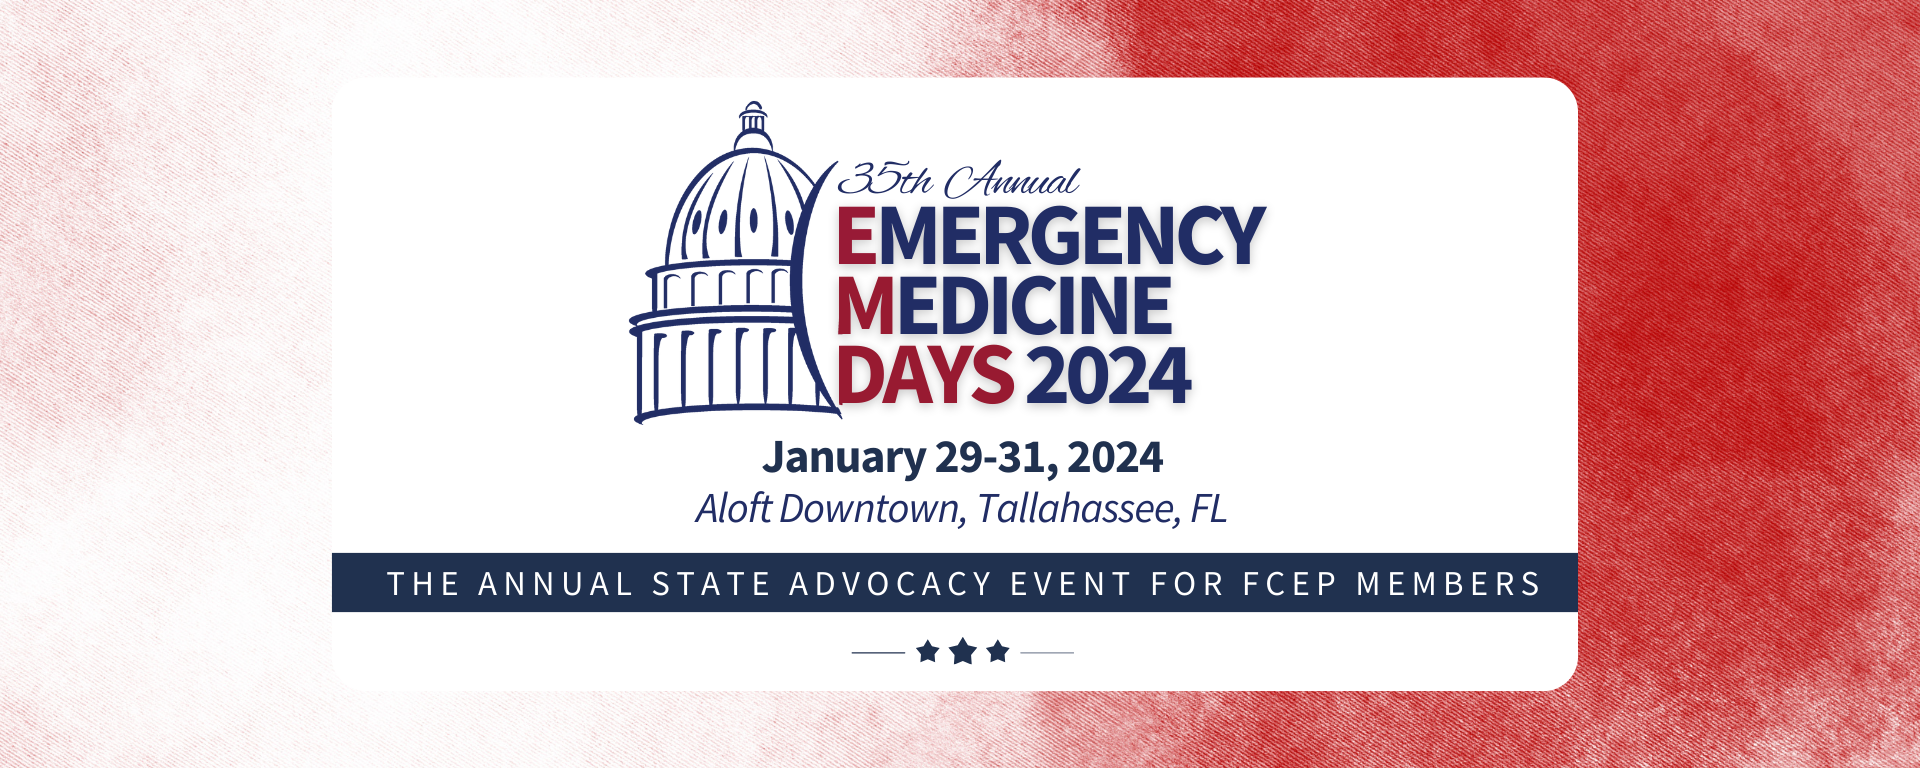 Emergency Medicine Days 2022